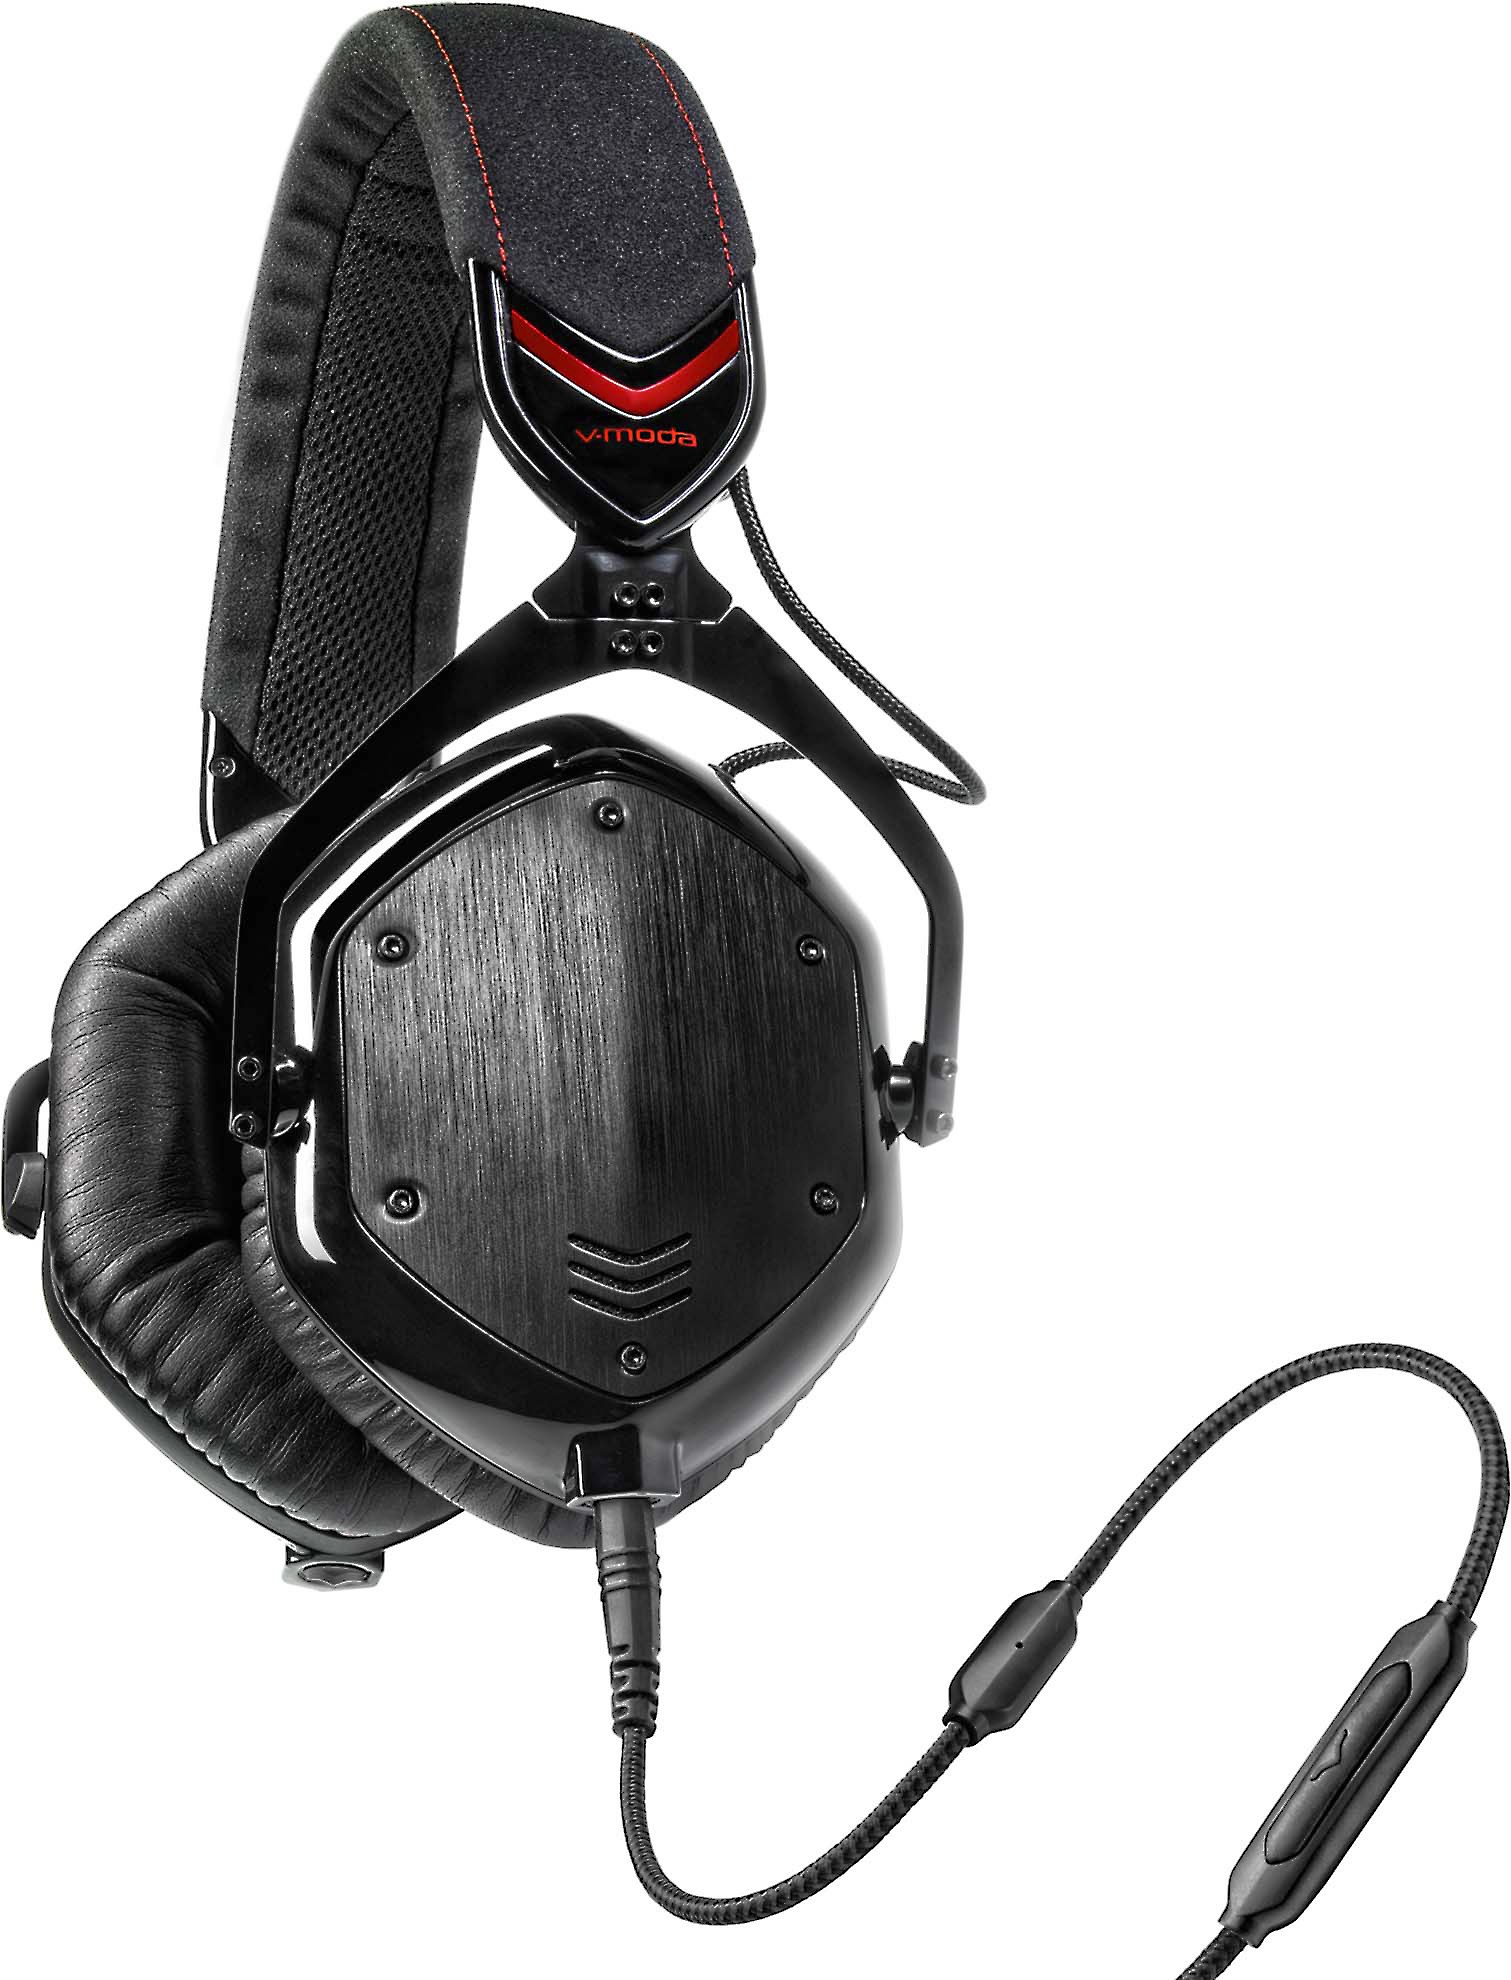 V Moda Crossfade M 100 Shadow Over Ear Headphones At Crutchfield